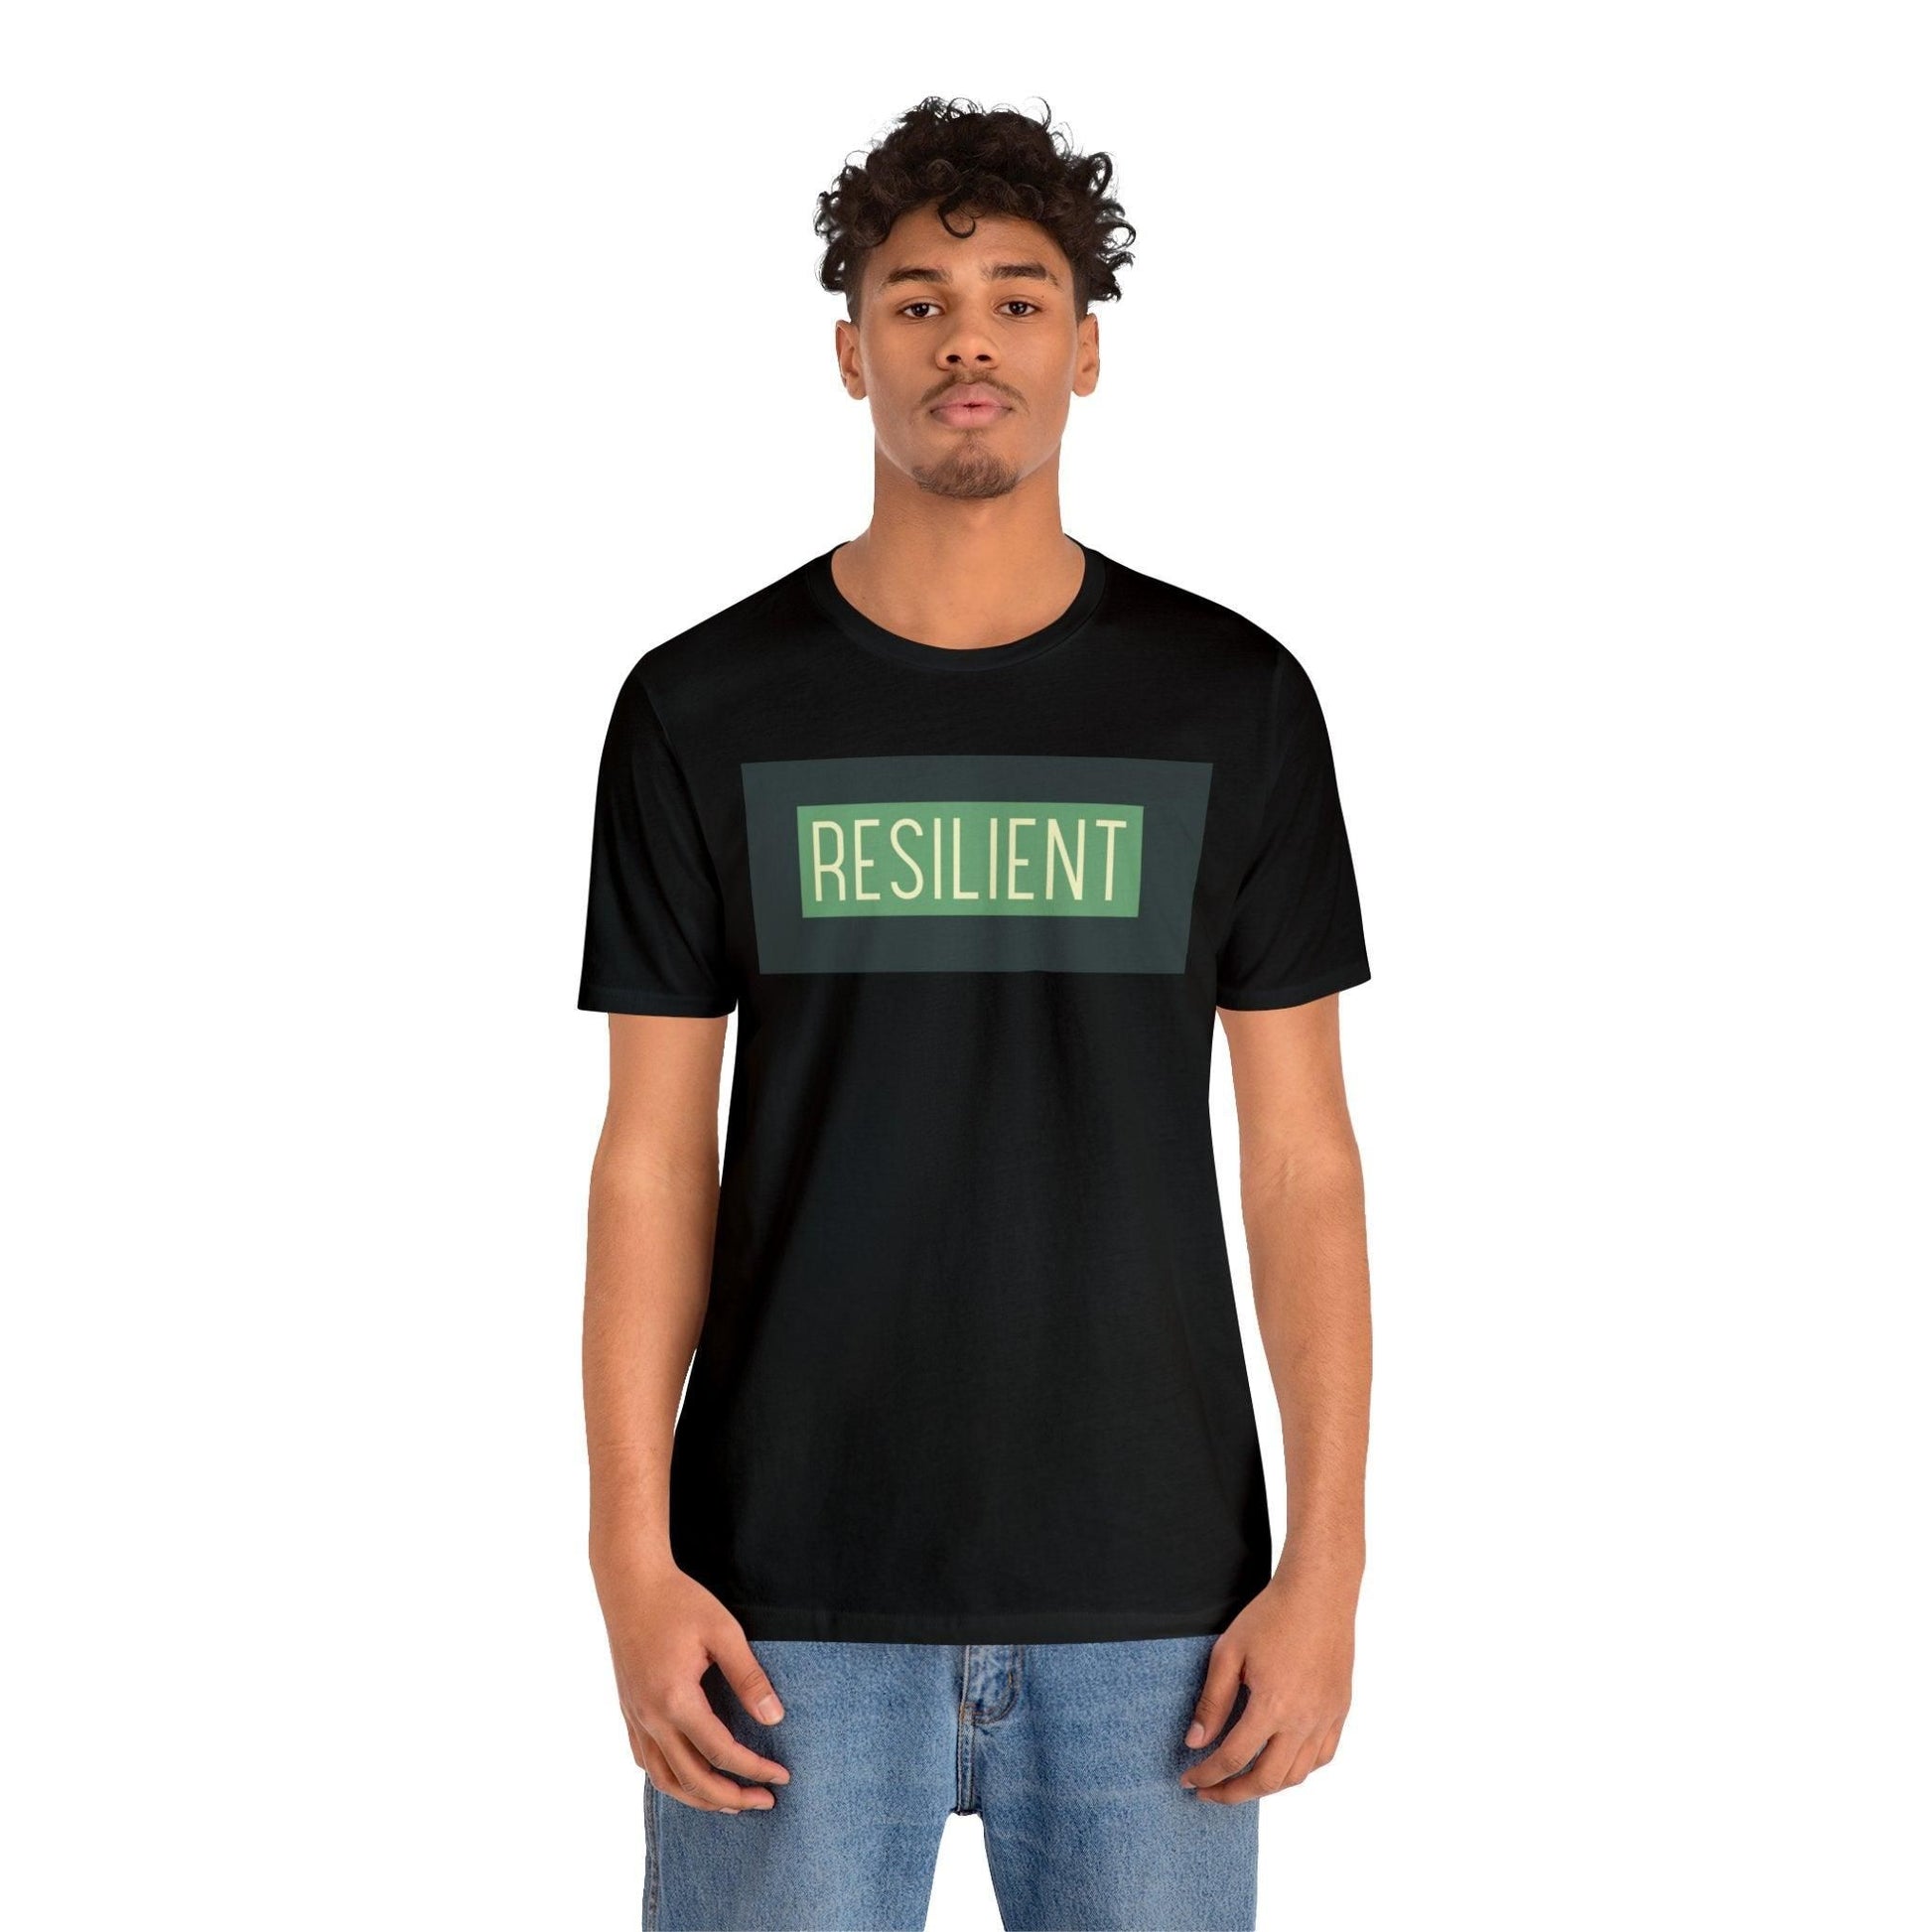 Resilient Unisex Tee T-Shirt Black XS 